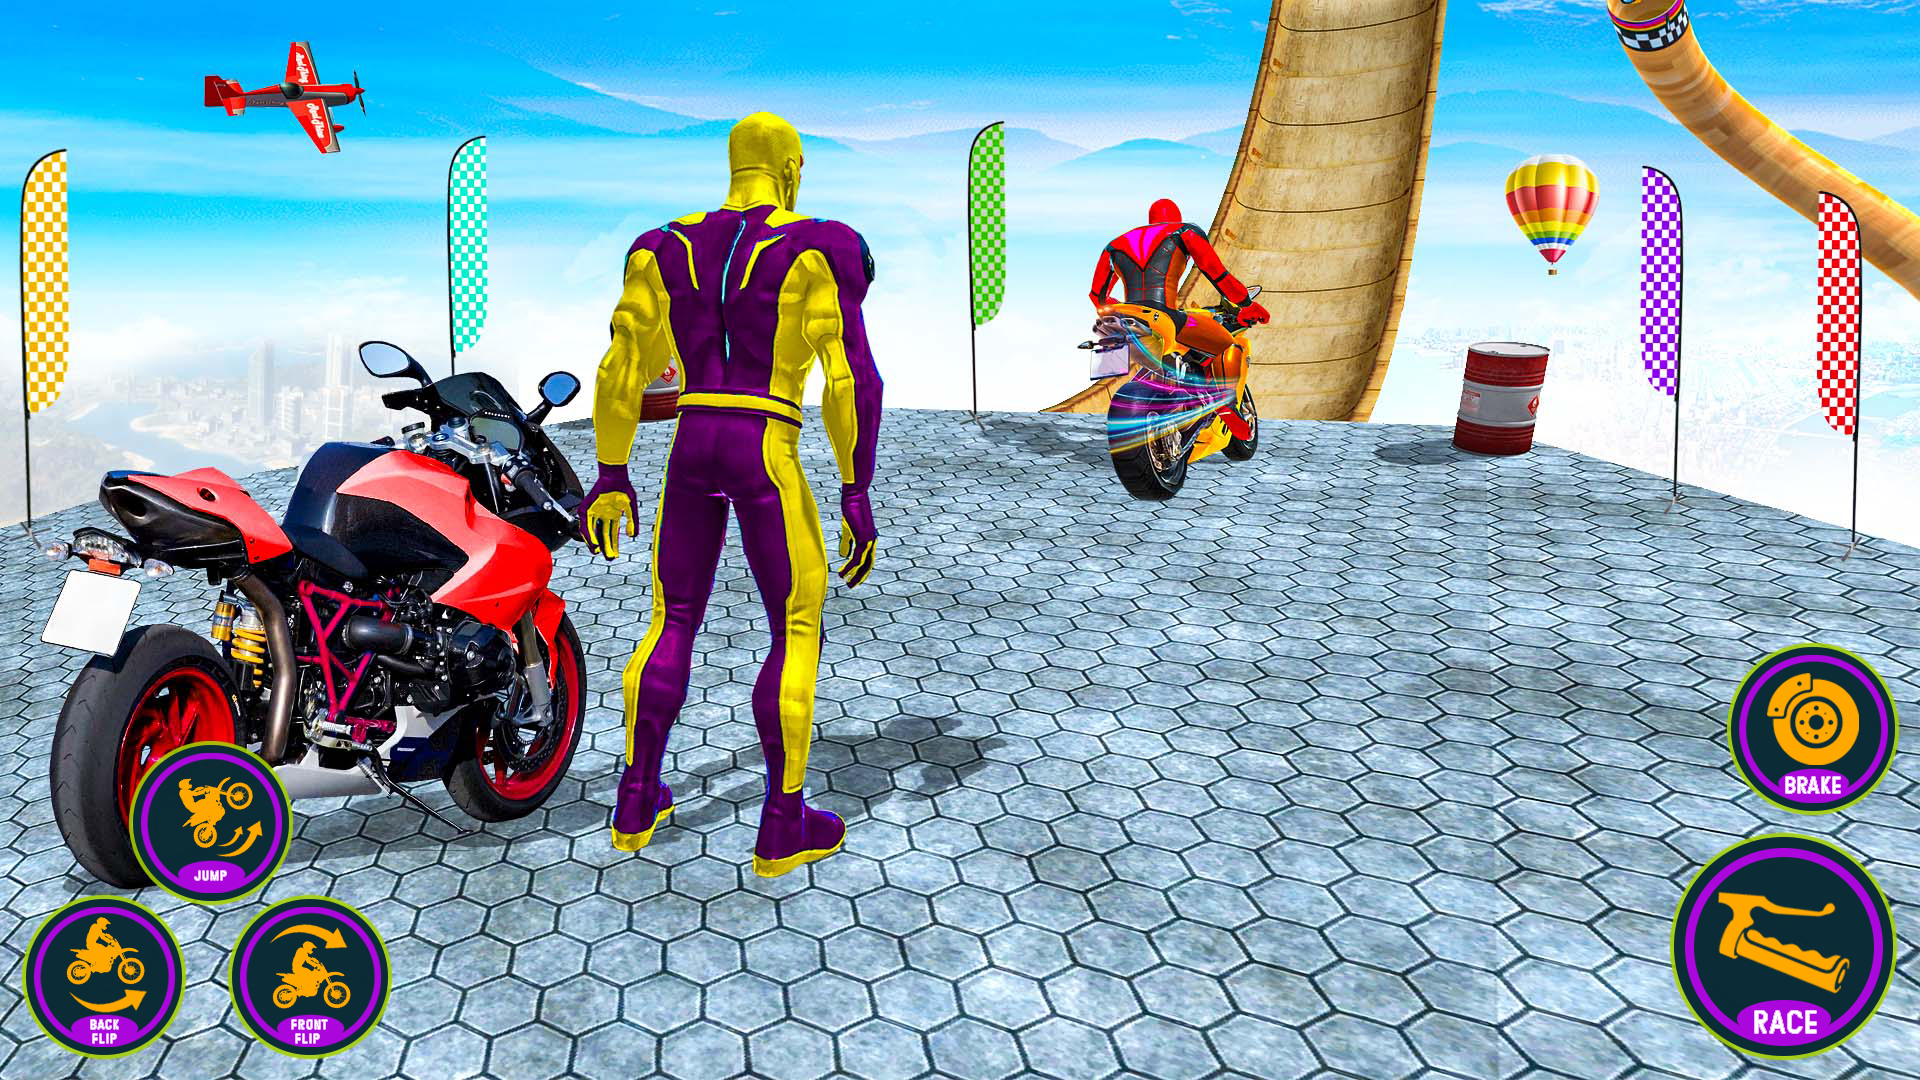 Screenshot 1 of スタントバイク3Dレース-トリッキーバイクマスター 2.3